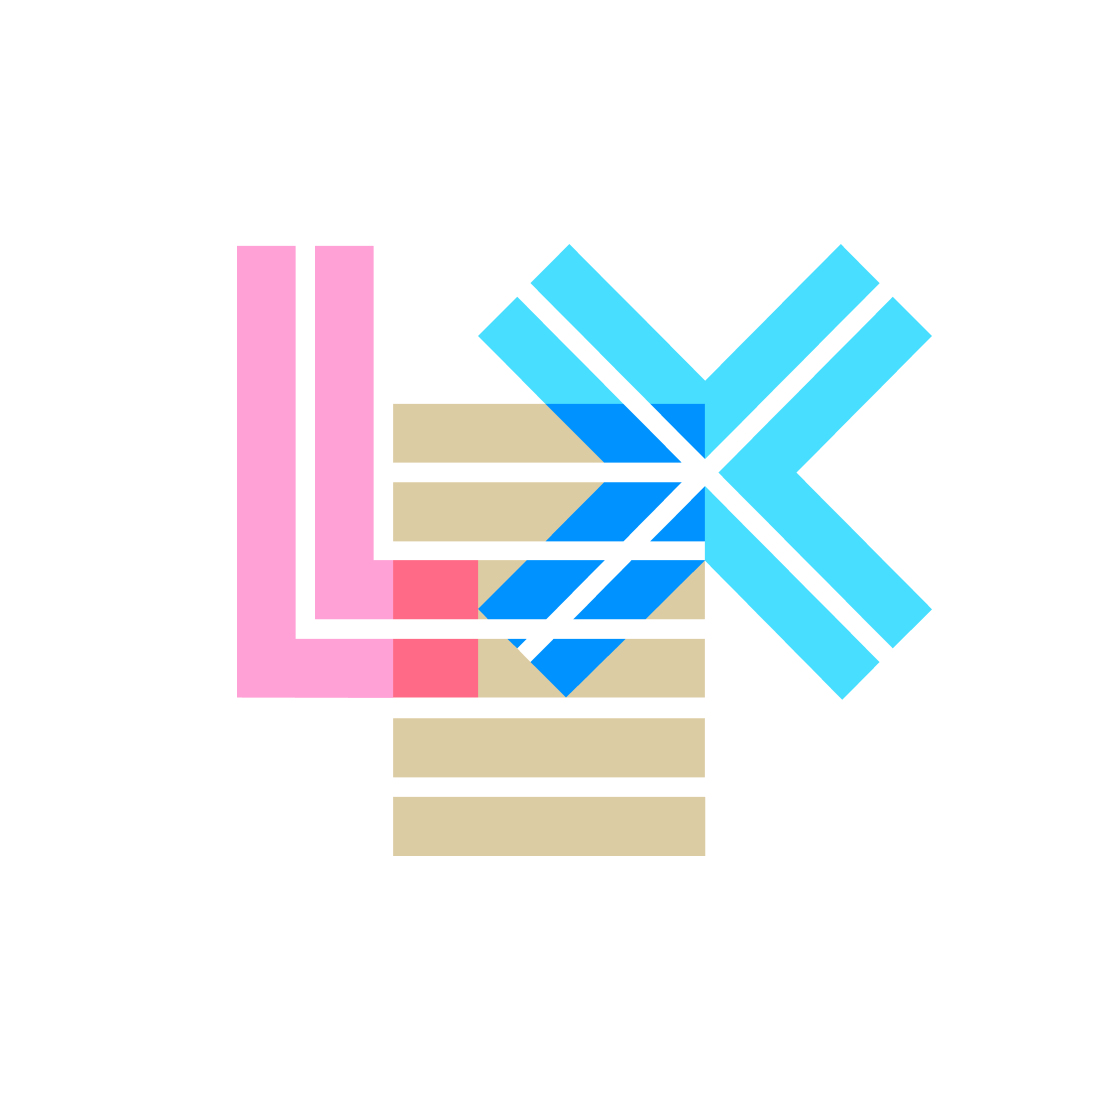 Lex logo